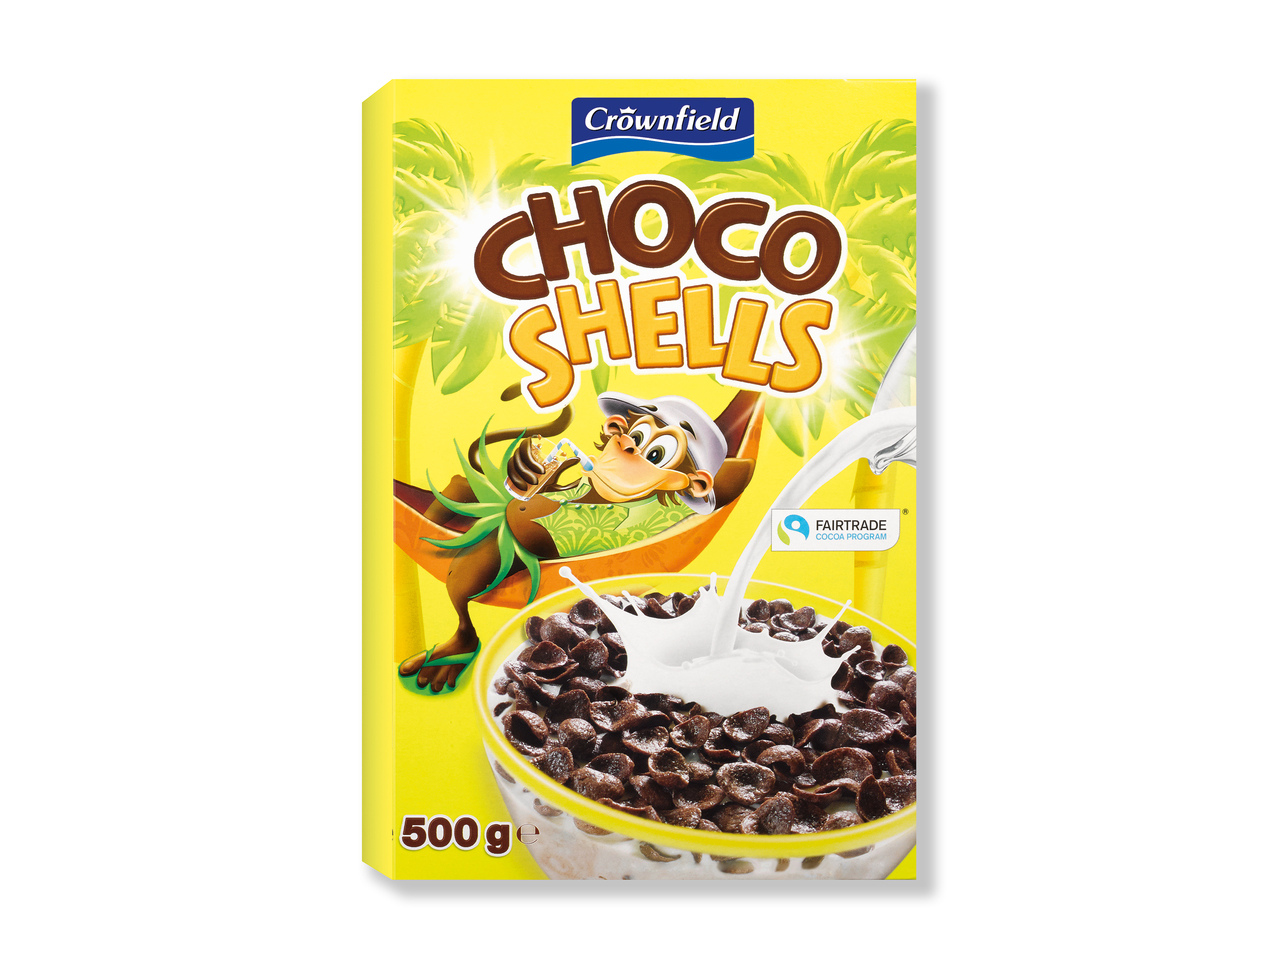 CROWNFIELD Choco shells